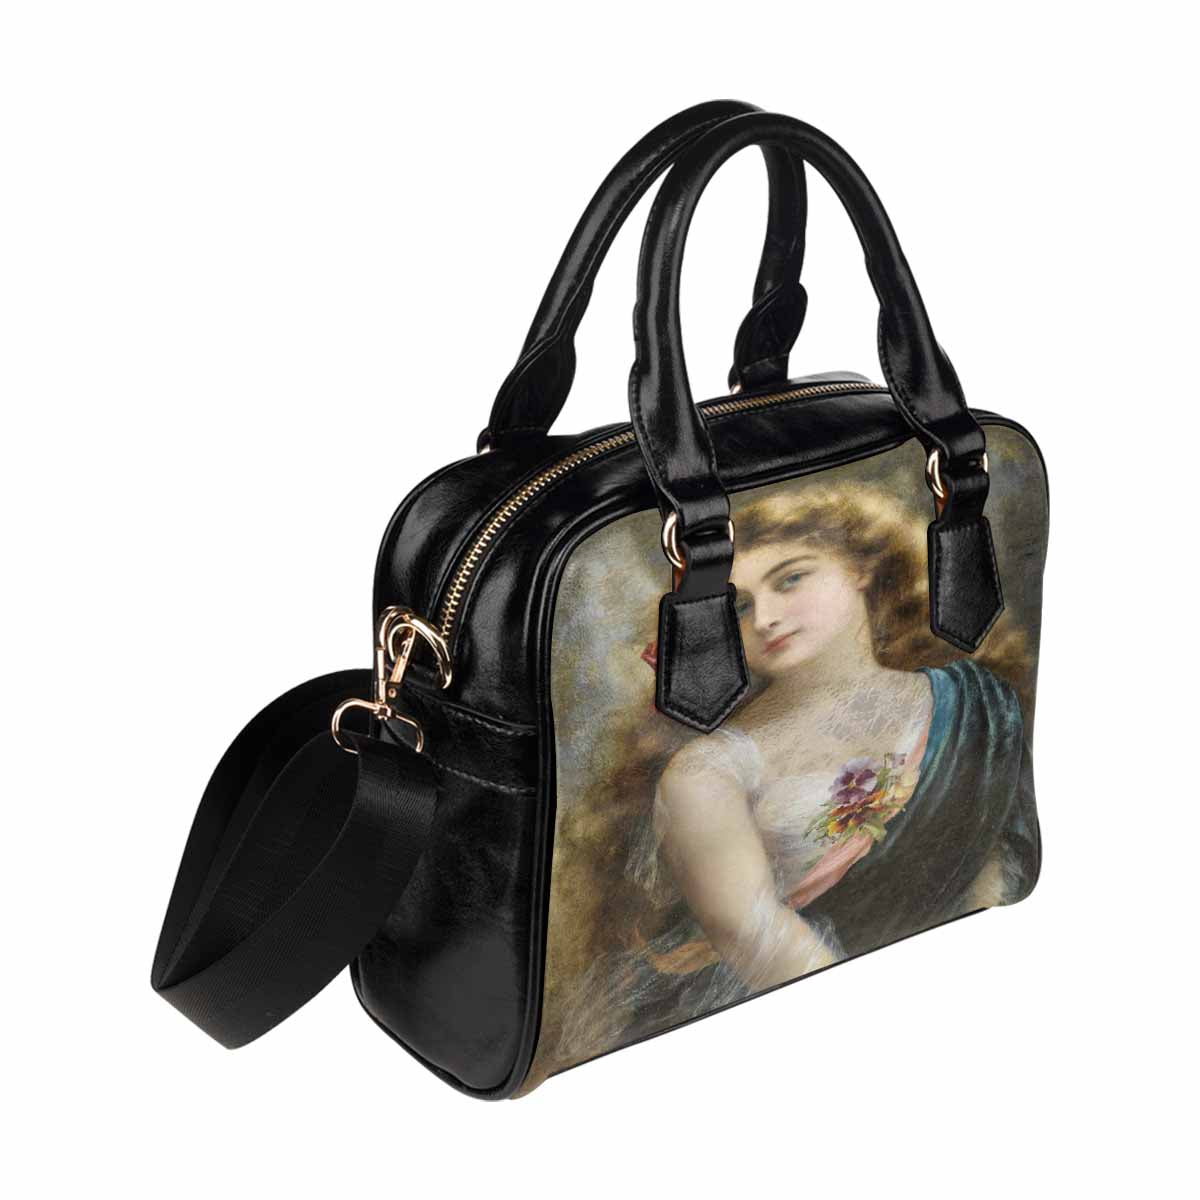 Victorian Lady design handbag, Mod 19163453, An auburn beauty